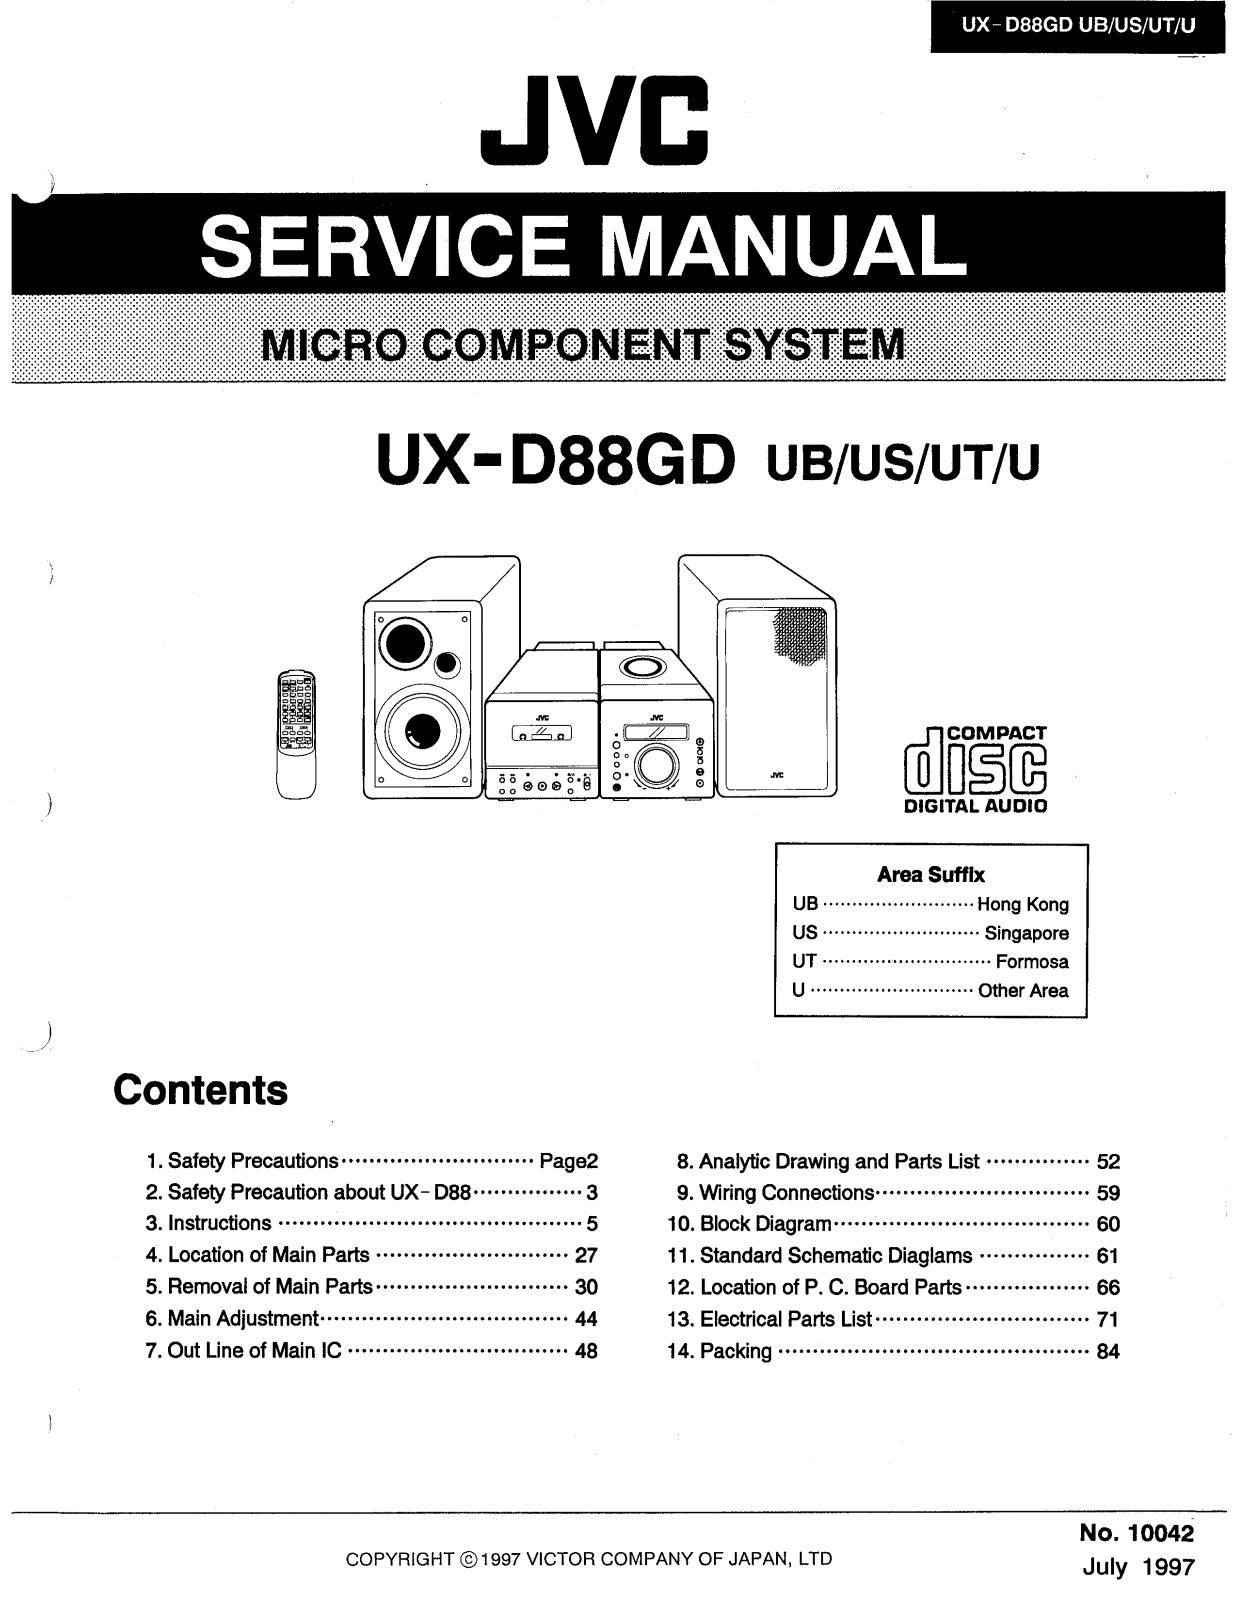 JVC UXD-88-GD Service manual